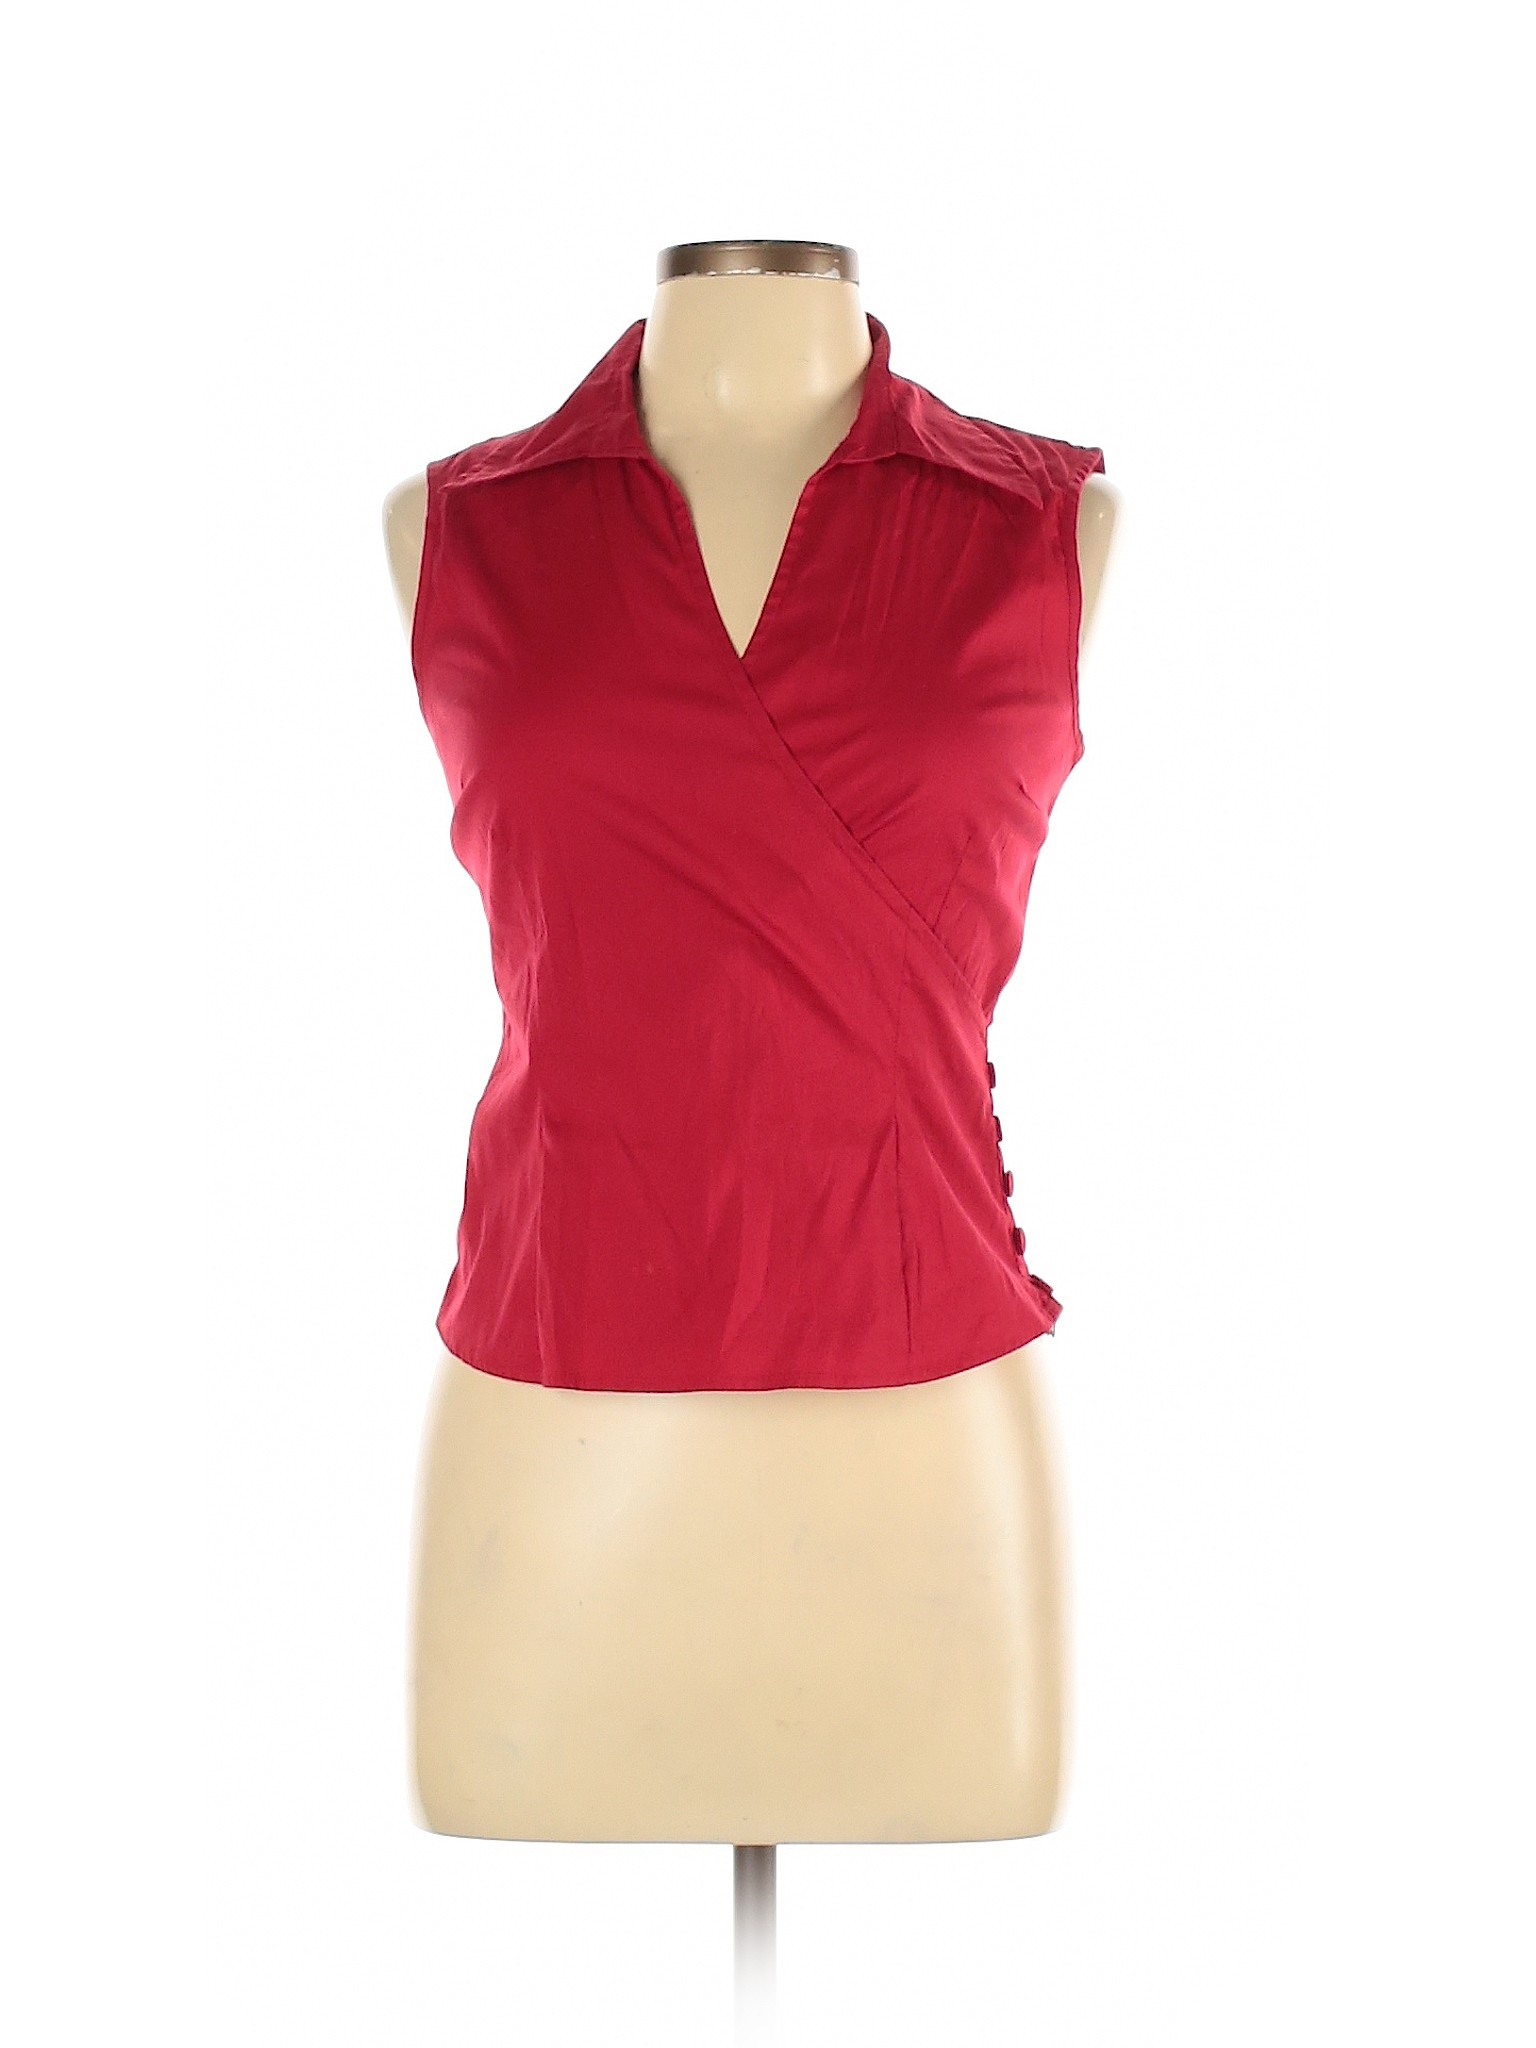 H&M Women Red Sleeveless Blouse 10 | eBay